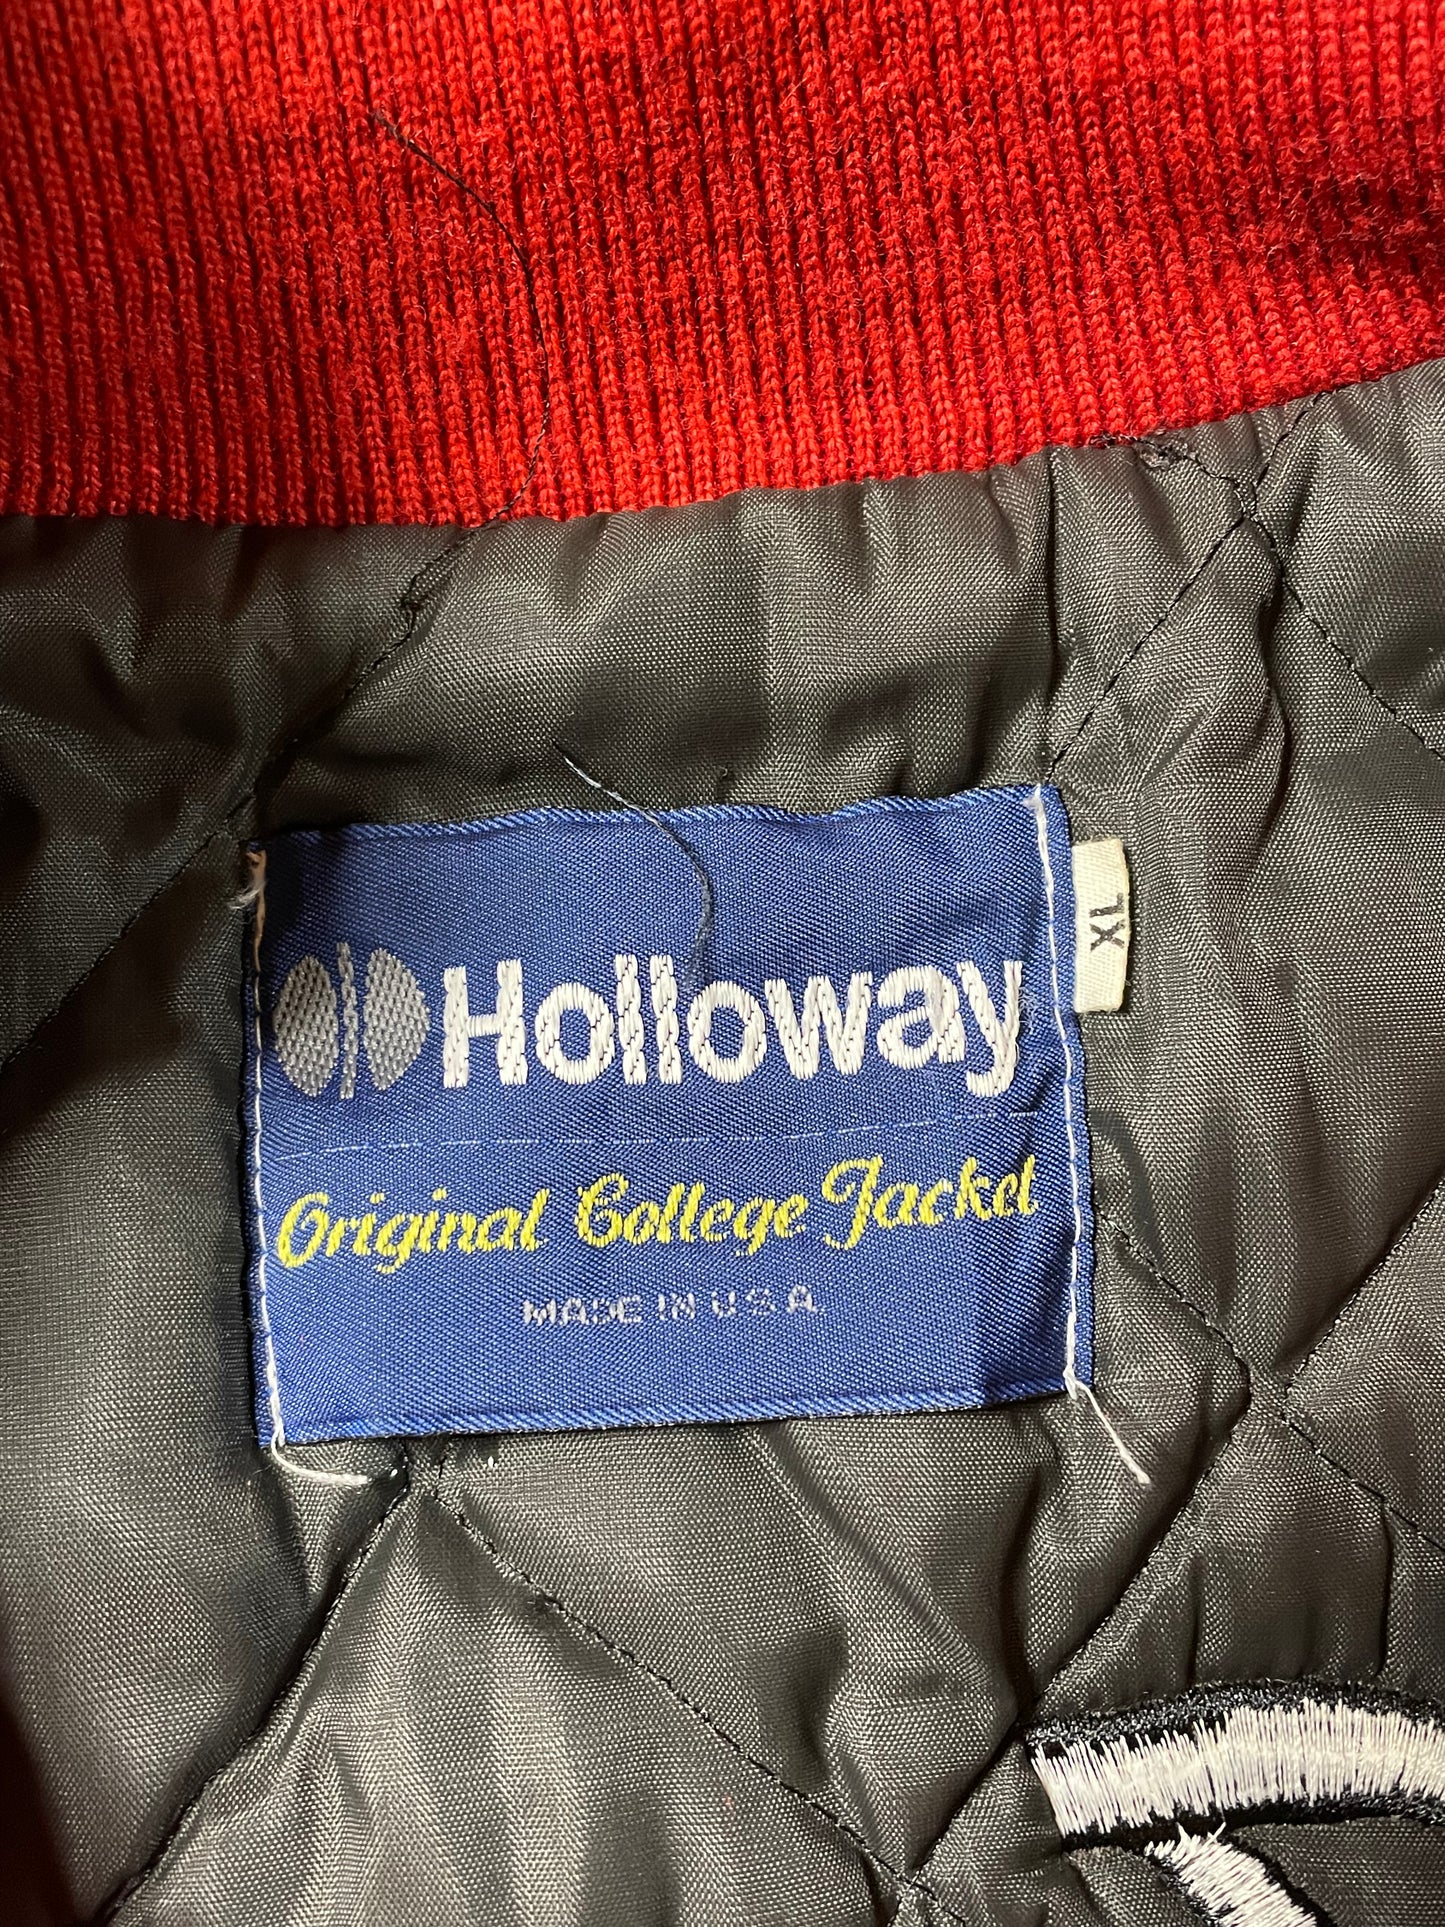 1995 Varsity Jacket